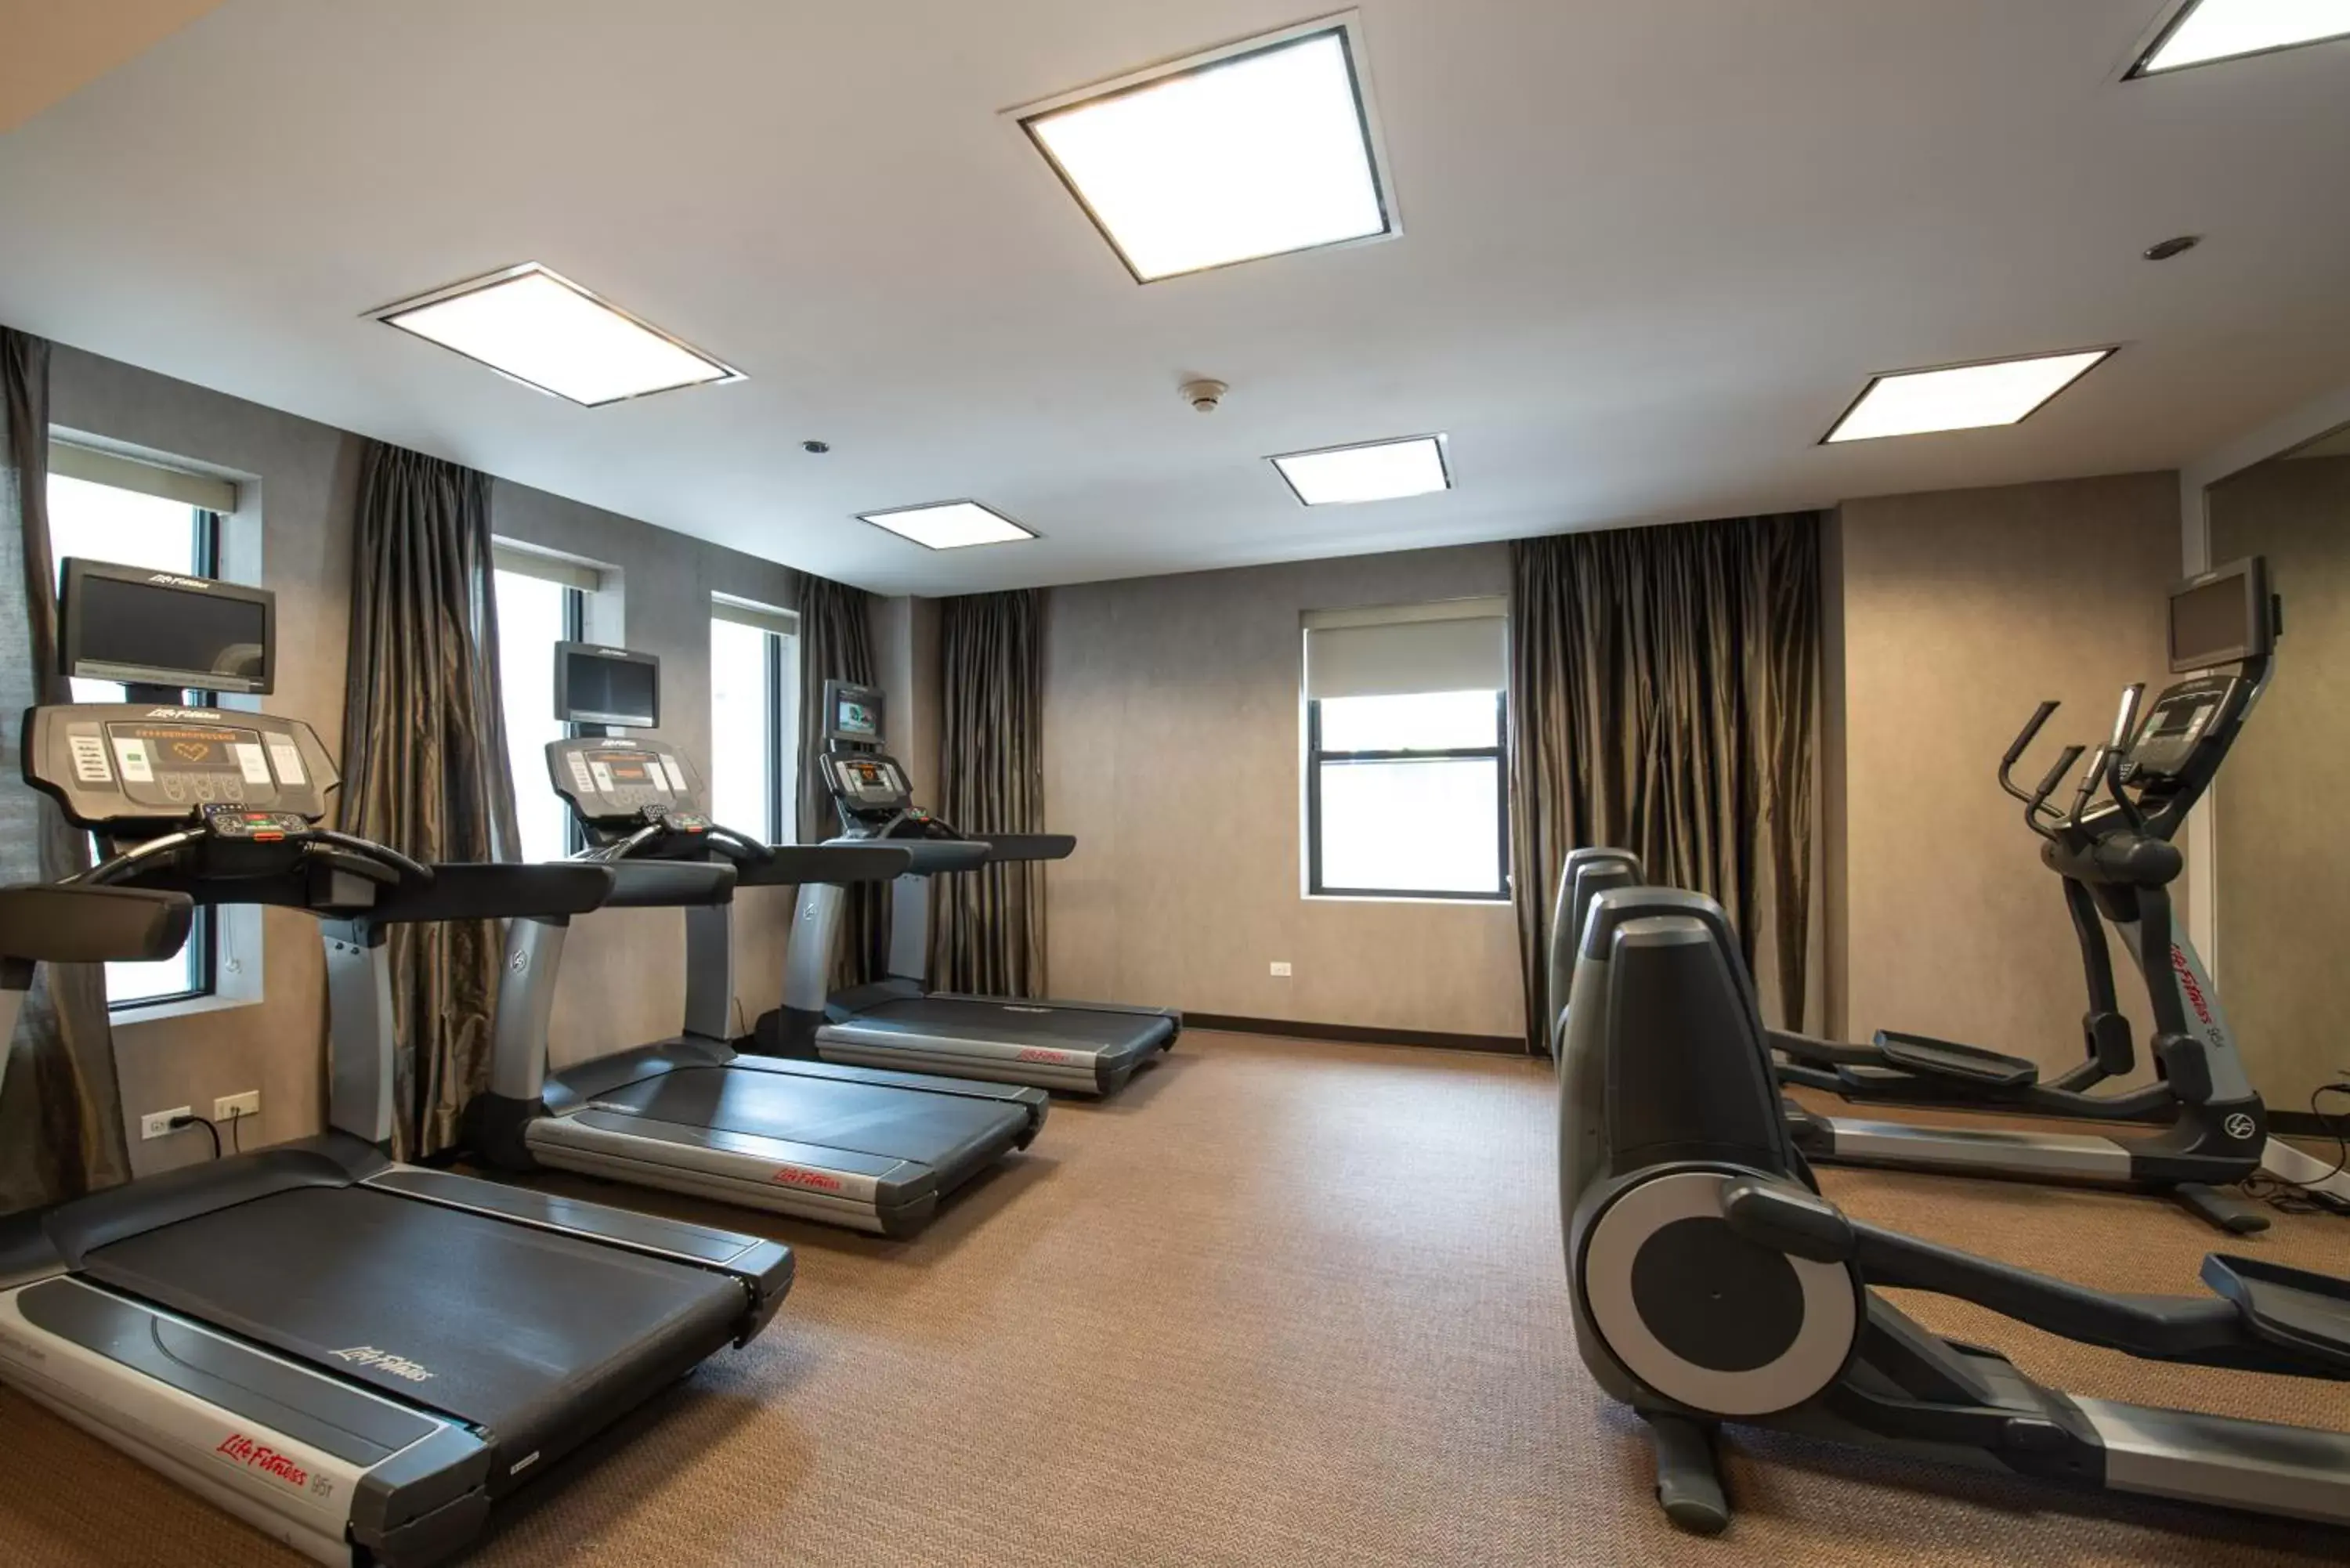 Fitness centre/facilities, Fitness Center/Facilities in Hotel Felix